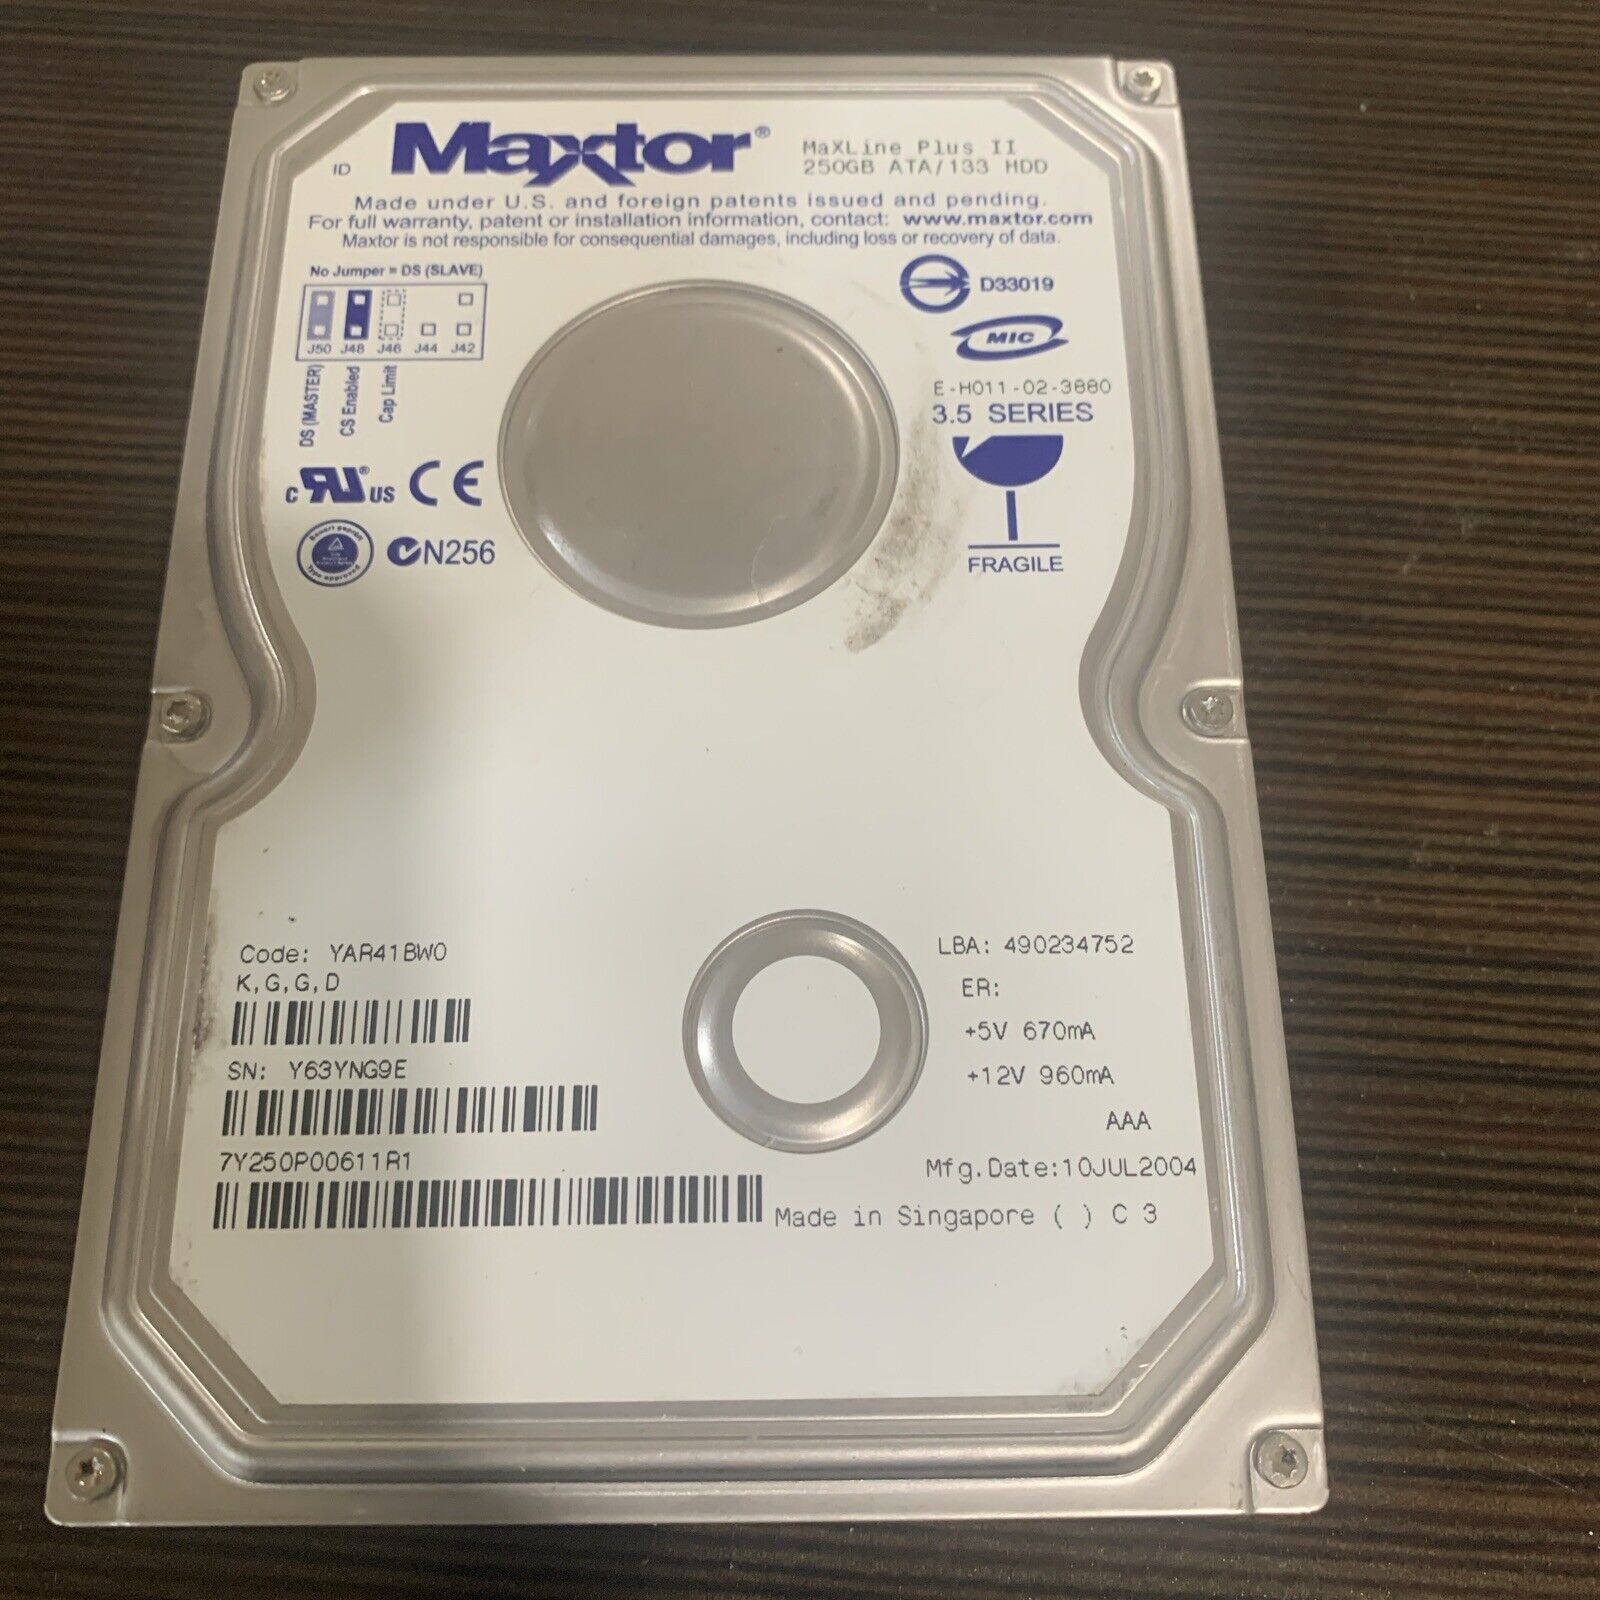 Maxtor MaxLine Plus II 7Y250P0 250GB Ide Hard Drive Code: YAR41BW0 K,M,B,D